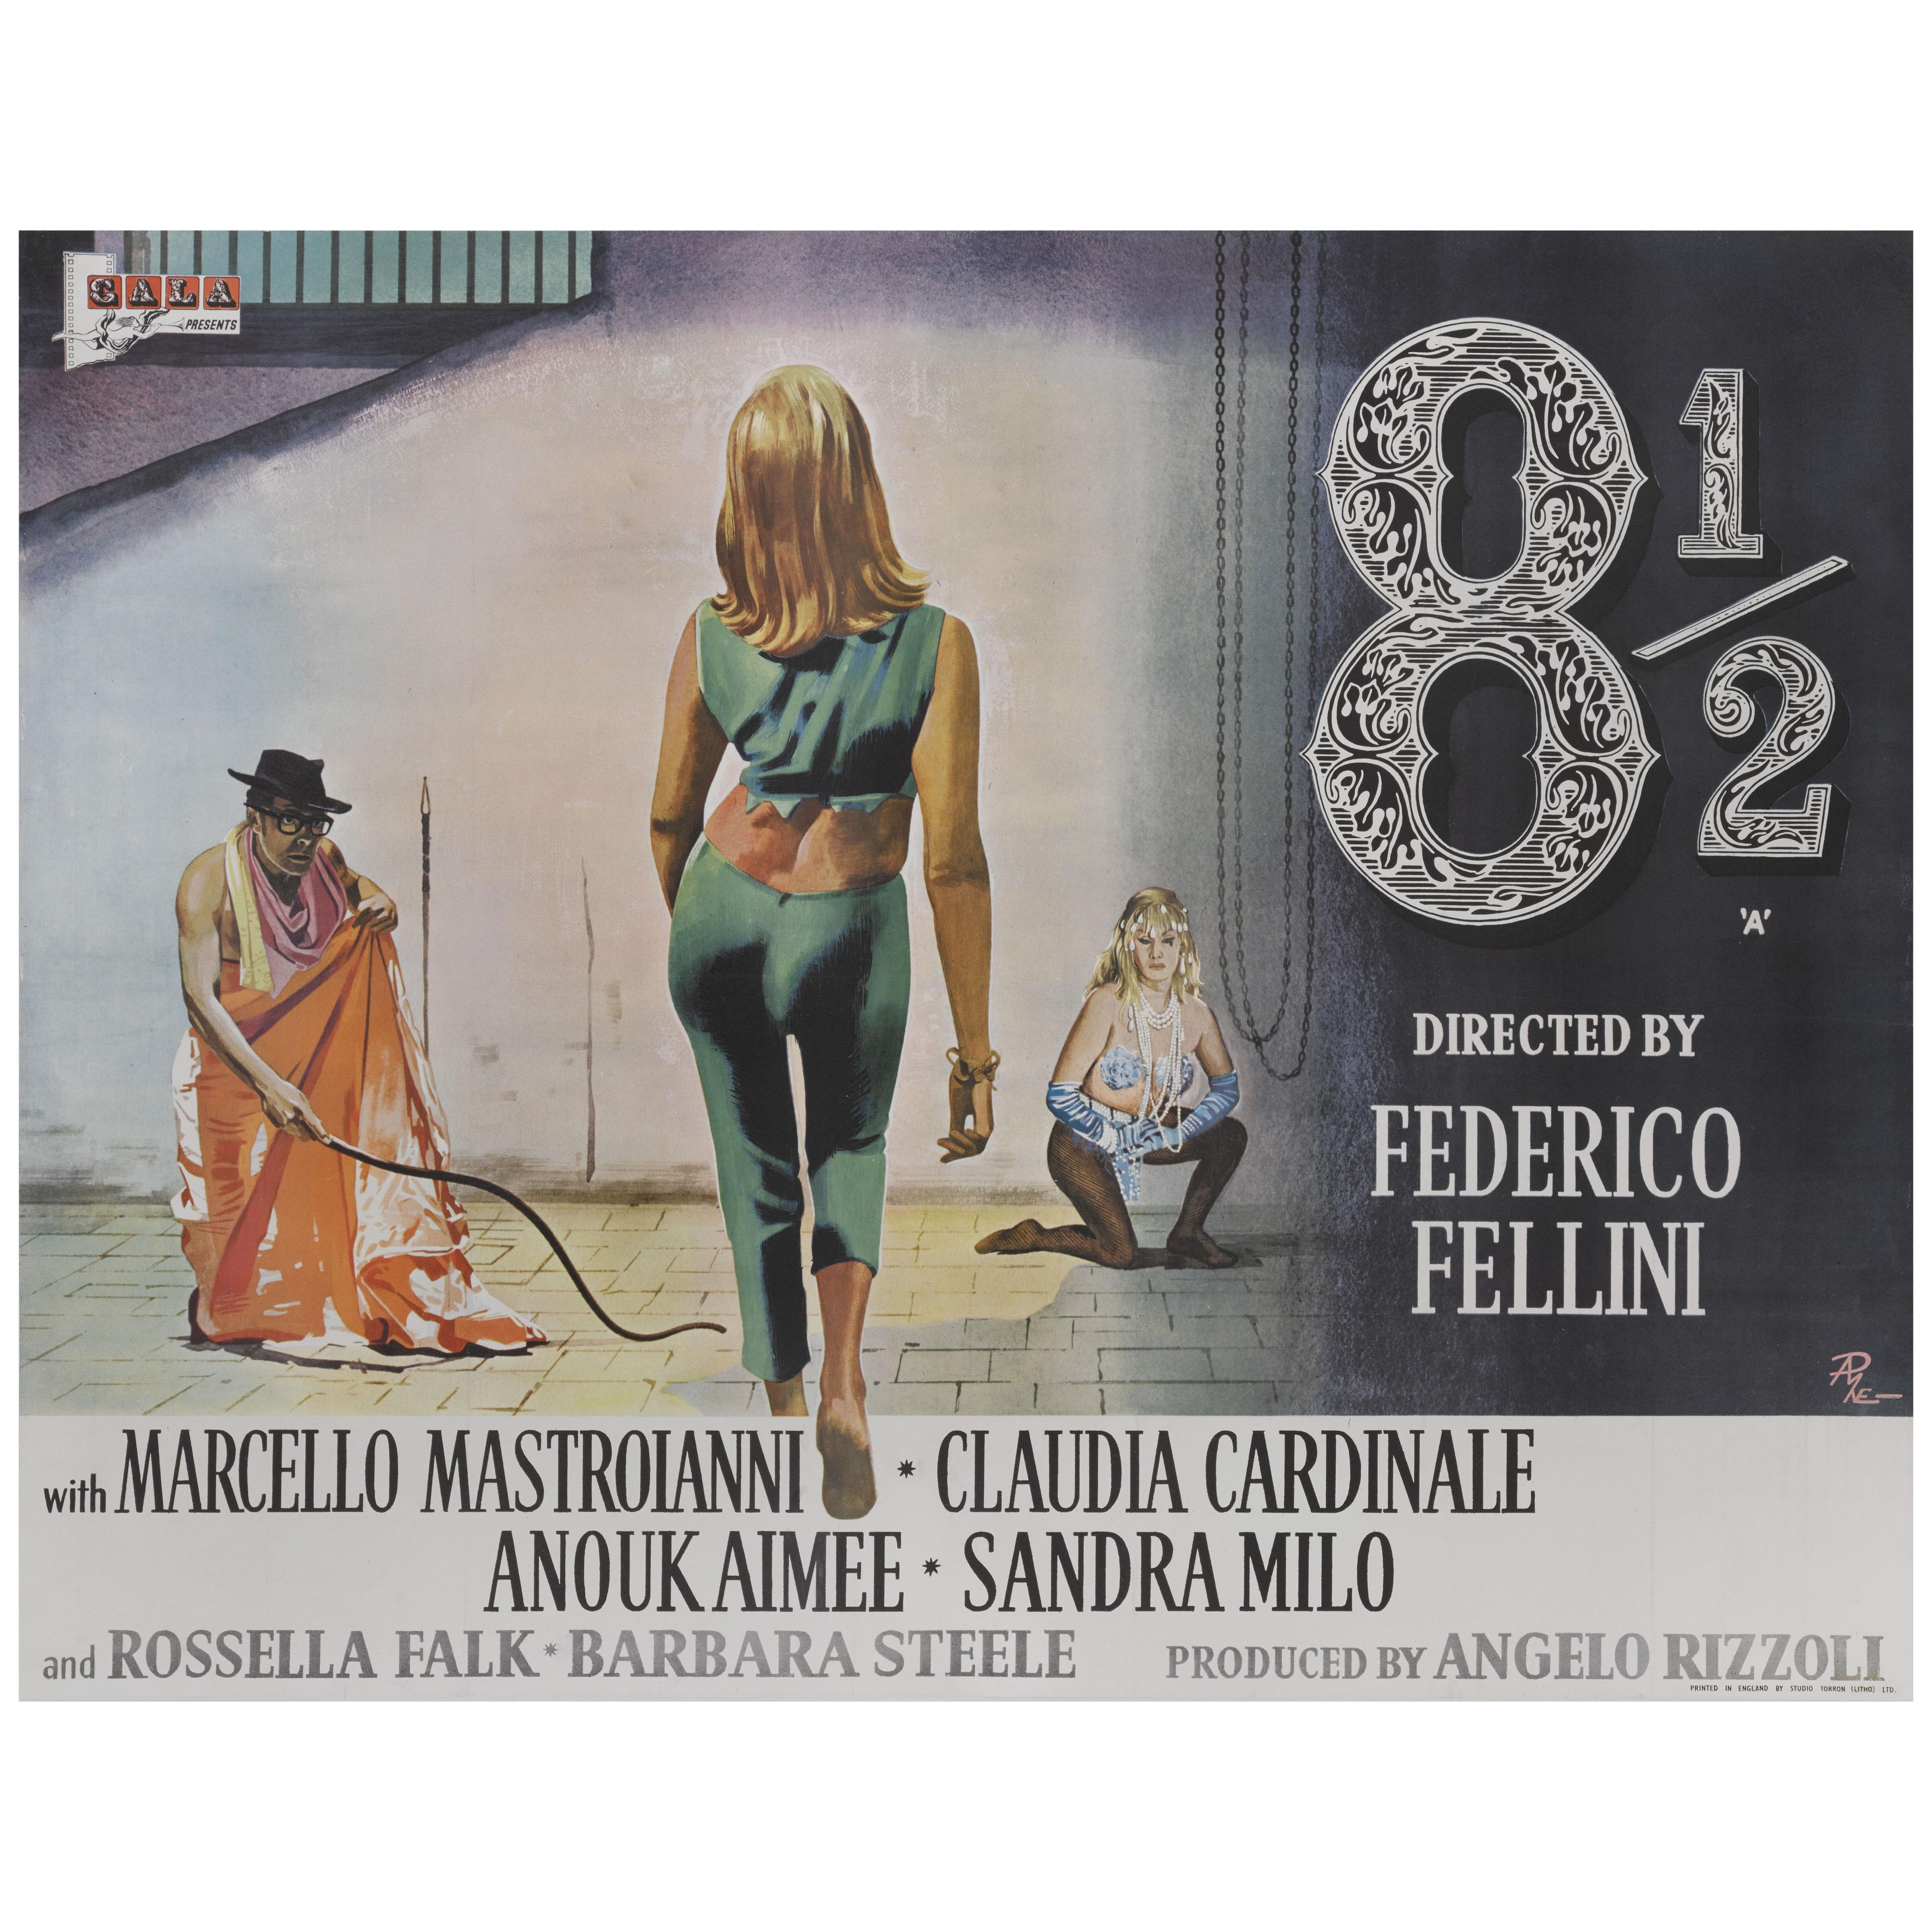 Federico Fellini's 8 1/2